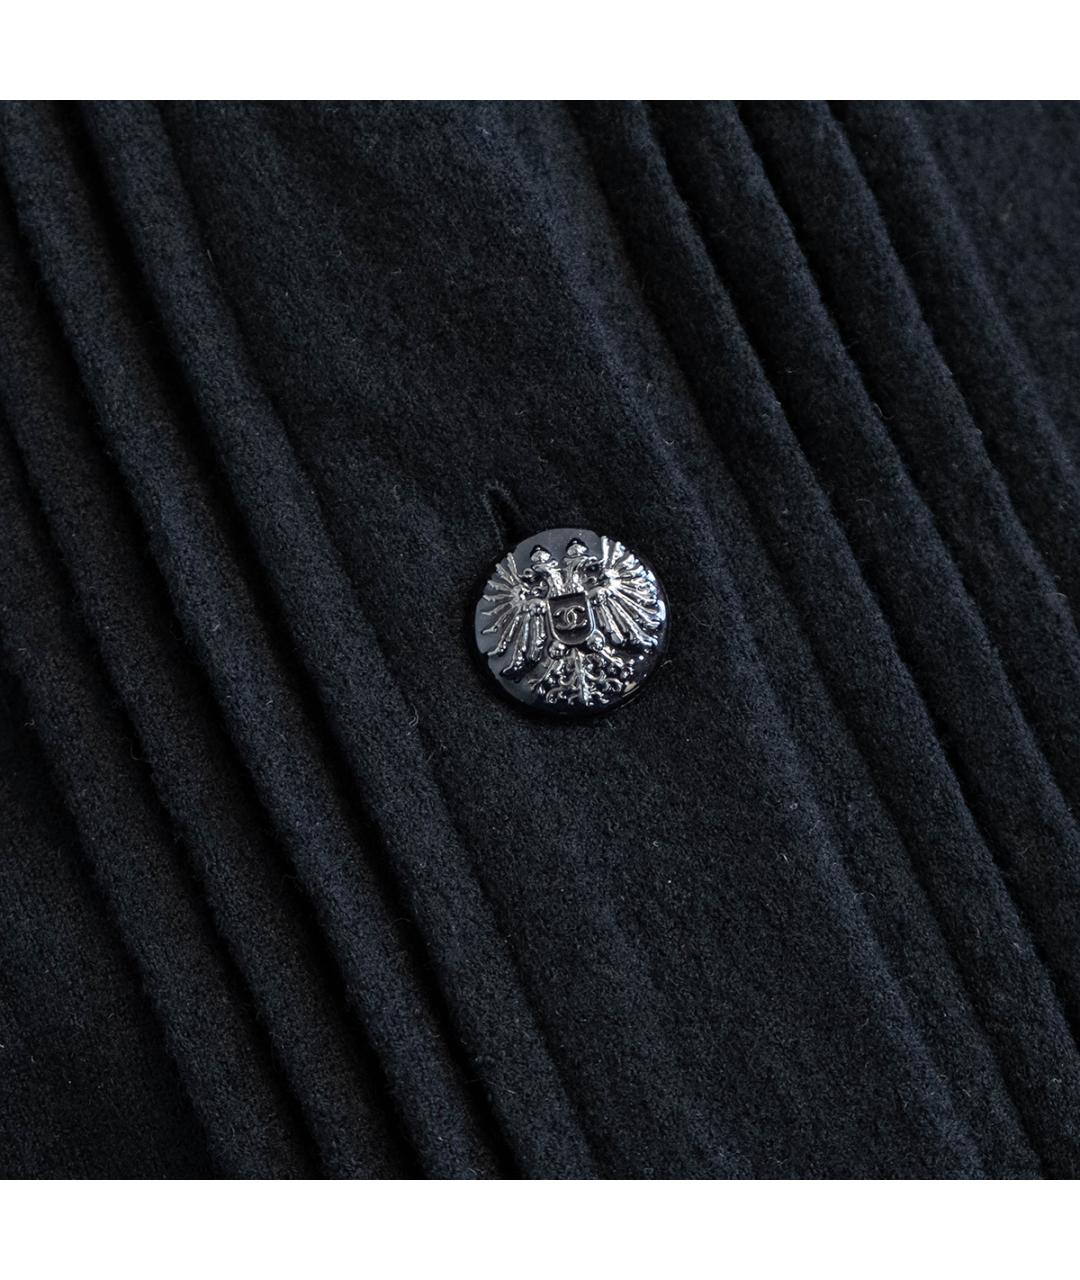 CHANEL PRE-OWNED Черный шерстяной джемпер / свитер, фото 5